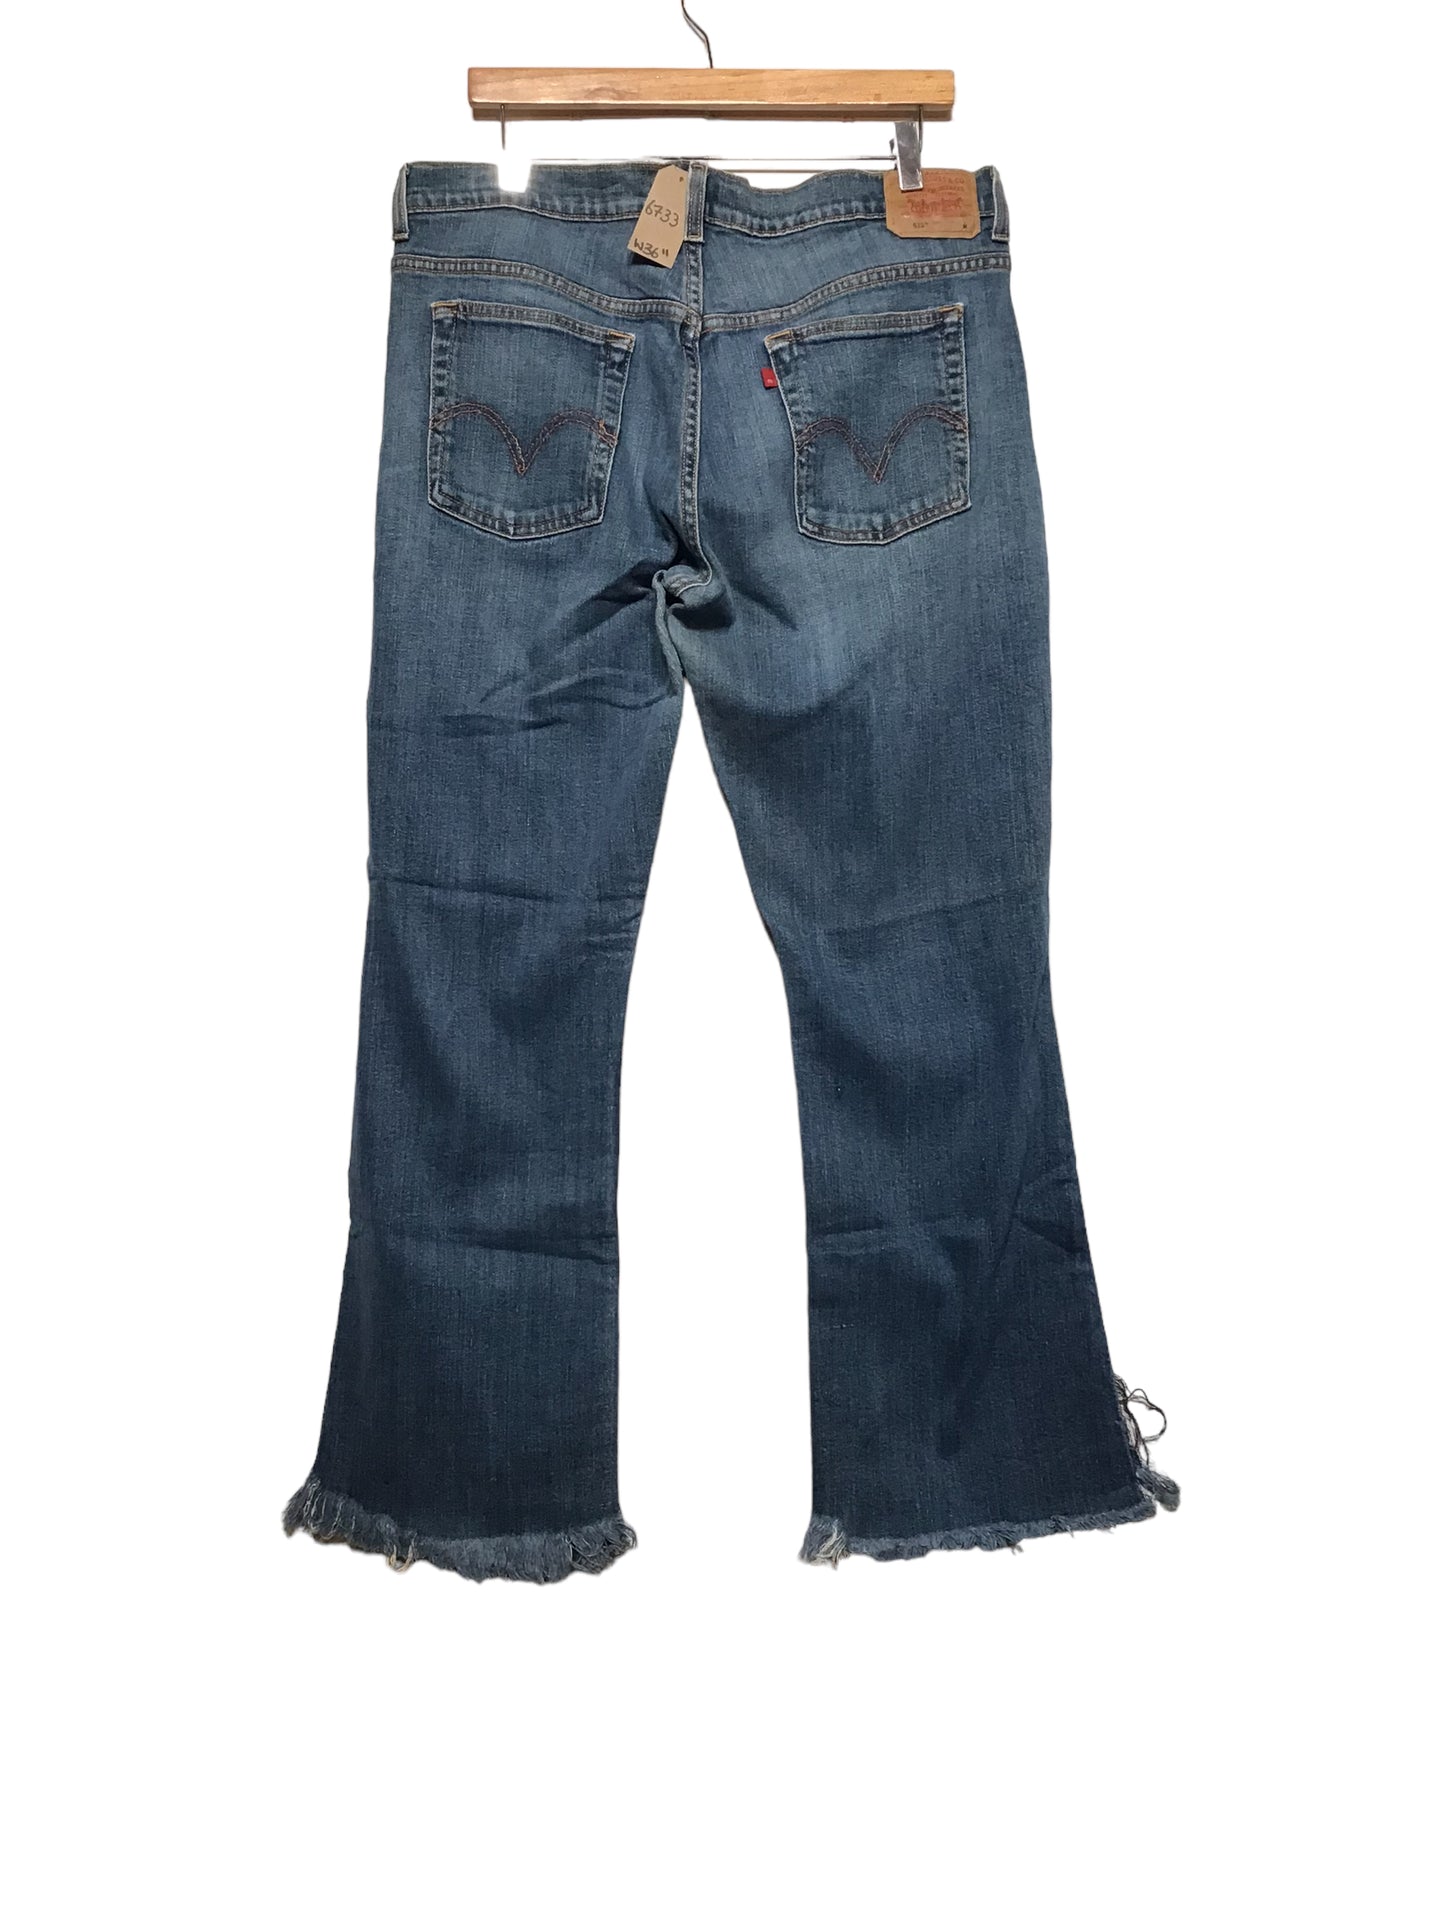 Levi 515 Boot Cut Jeans (38x 31)